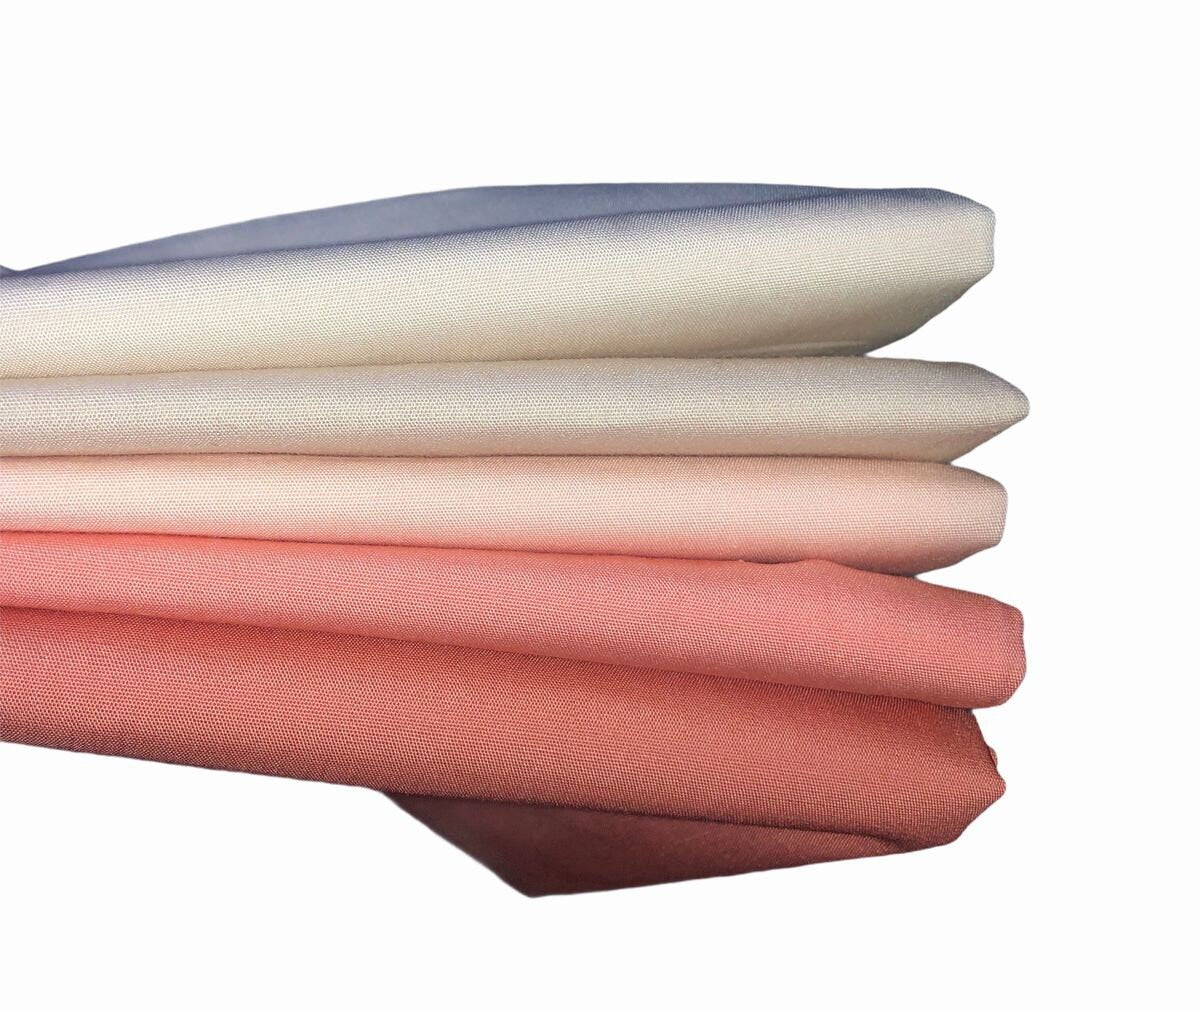 Ballerina Fusion Coordinating Solids Bundle - 5 pieces - Pure Solids by Art Gallery Fabrics - 100% Cotton